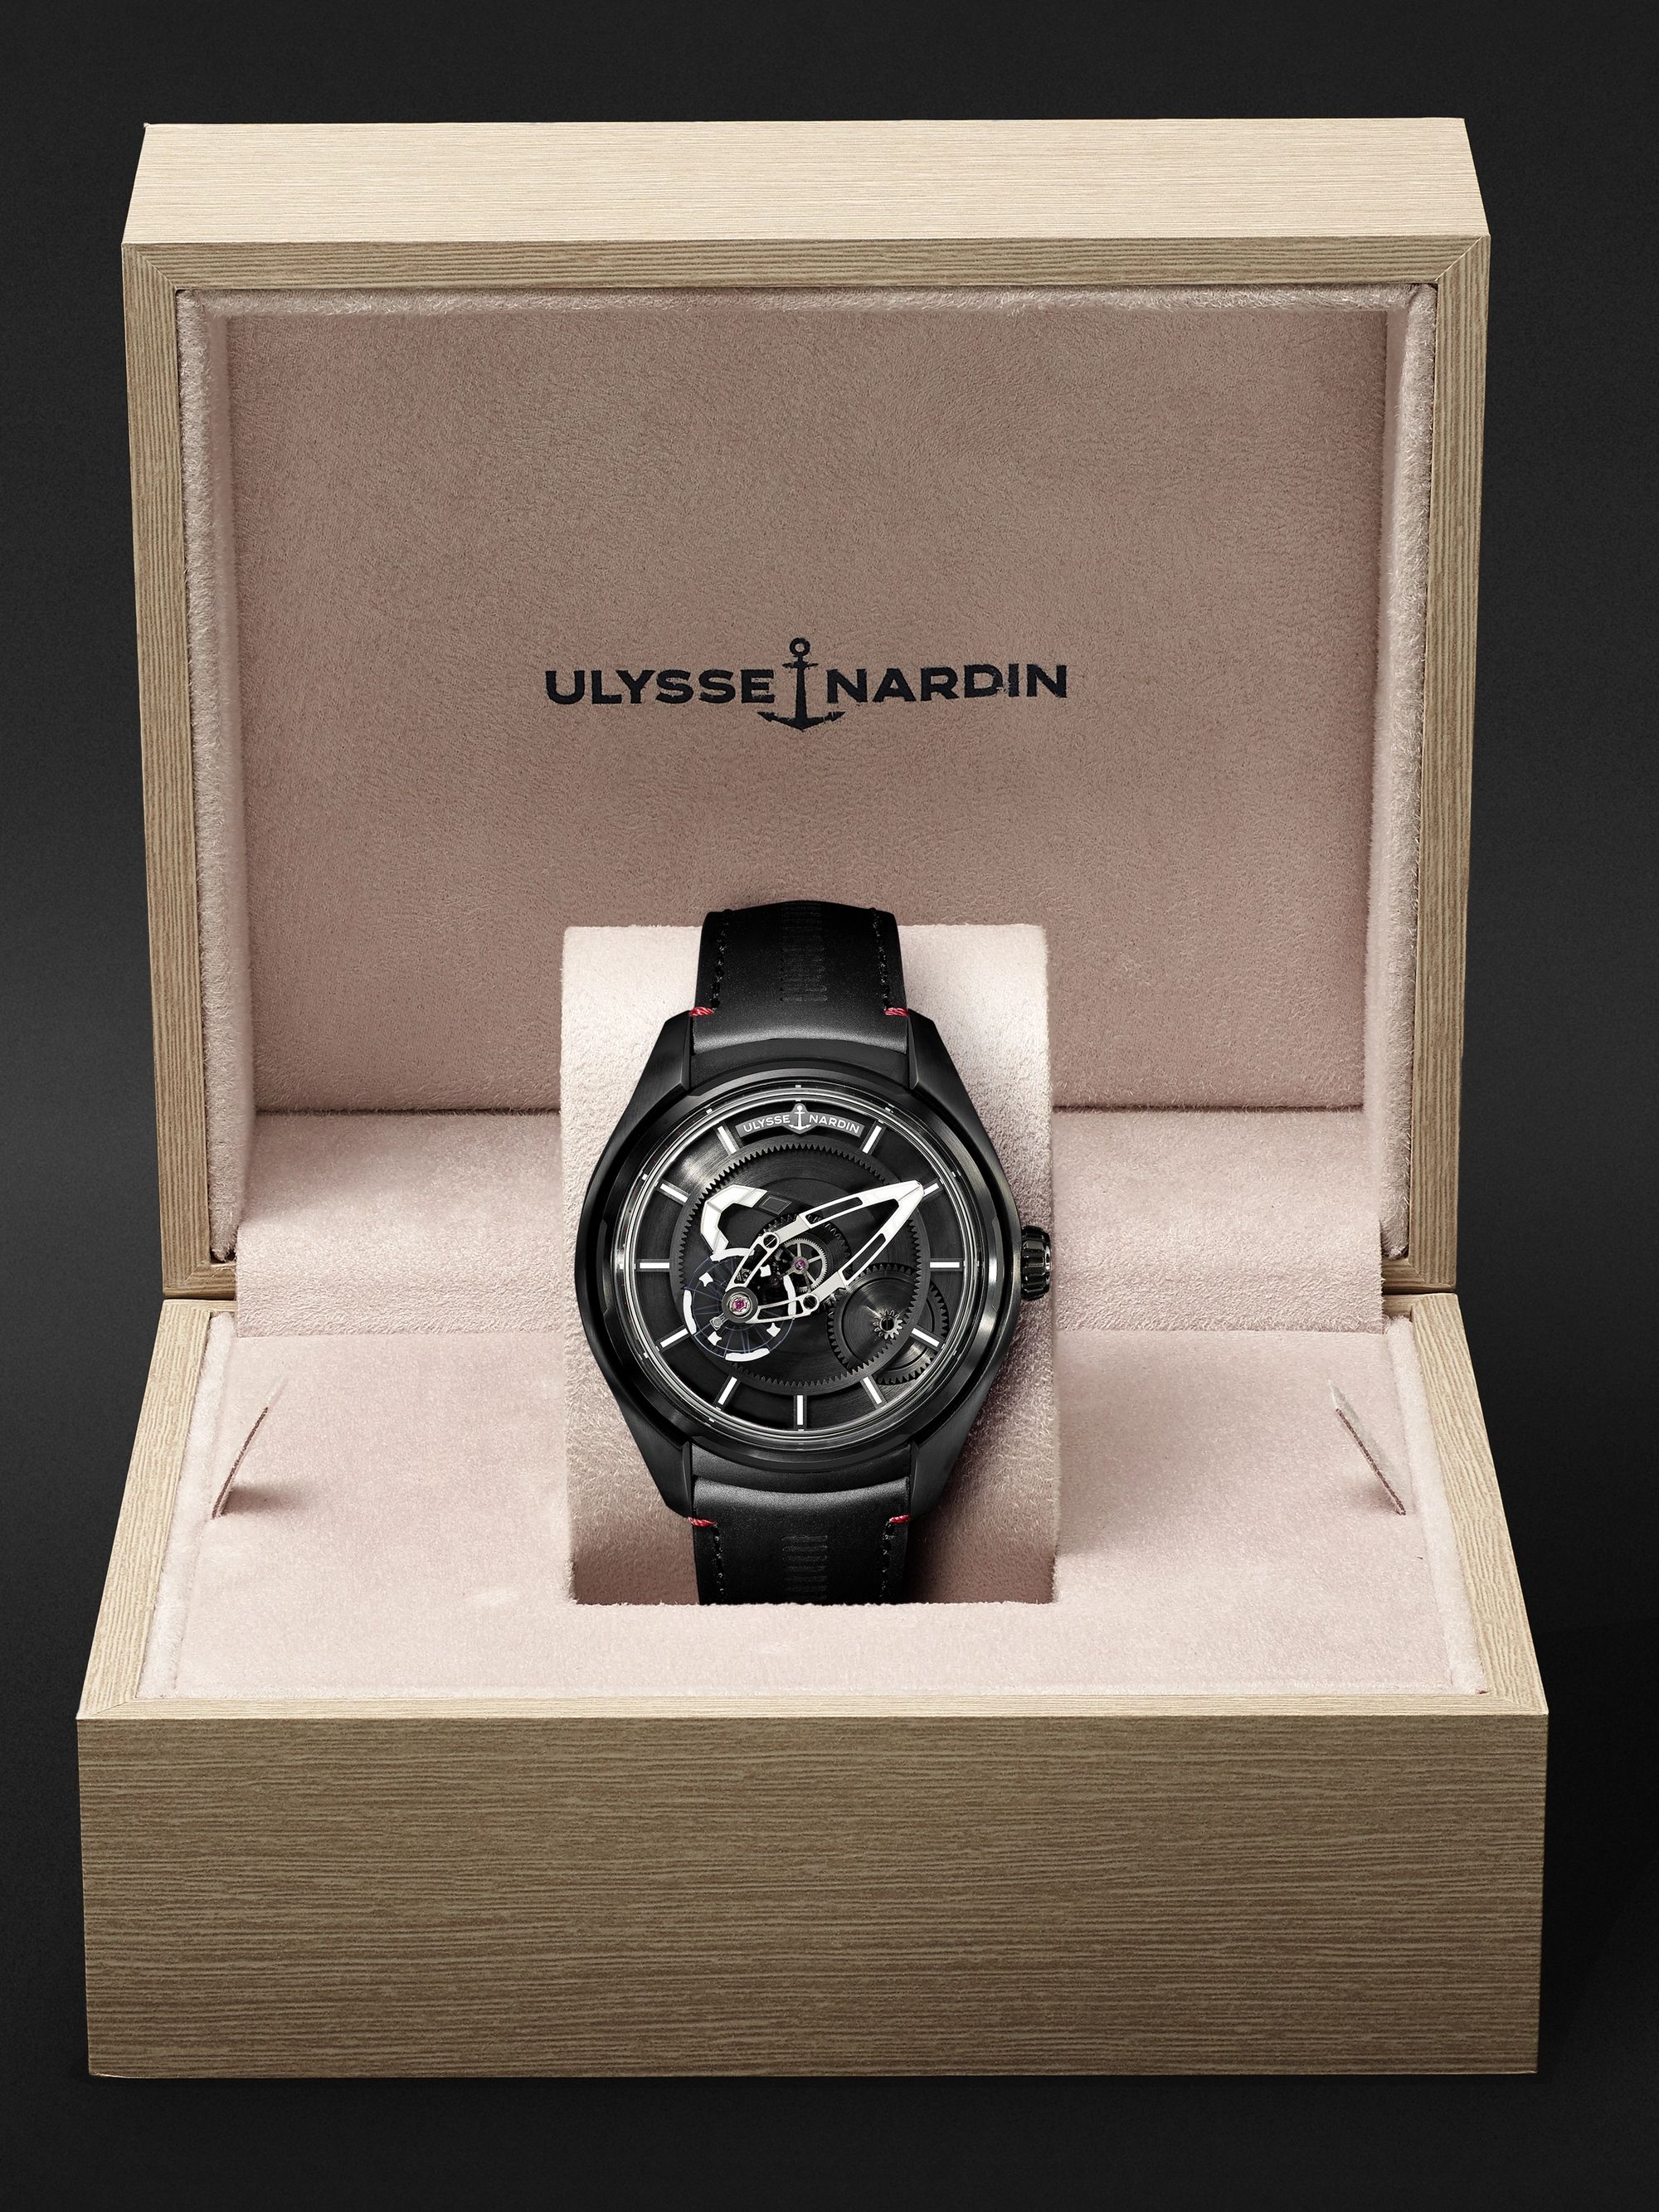 ULYSSE NARDIN Freak X Ti Automatic 43mm Titanium and Leather Watch, Ref. No. 2303-270.1